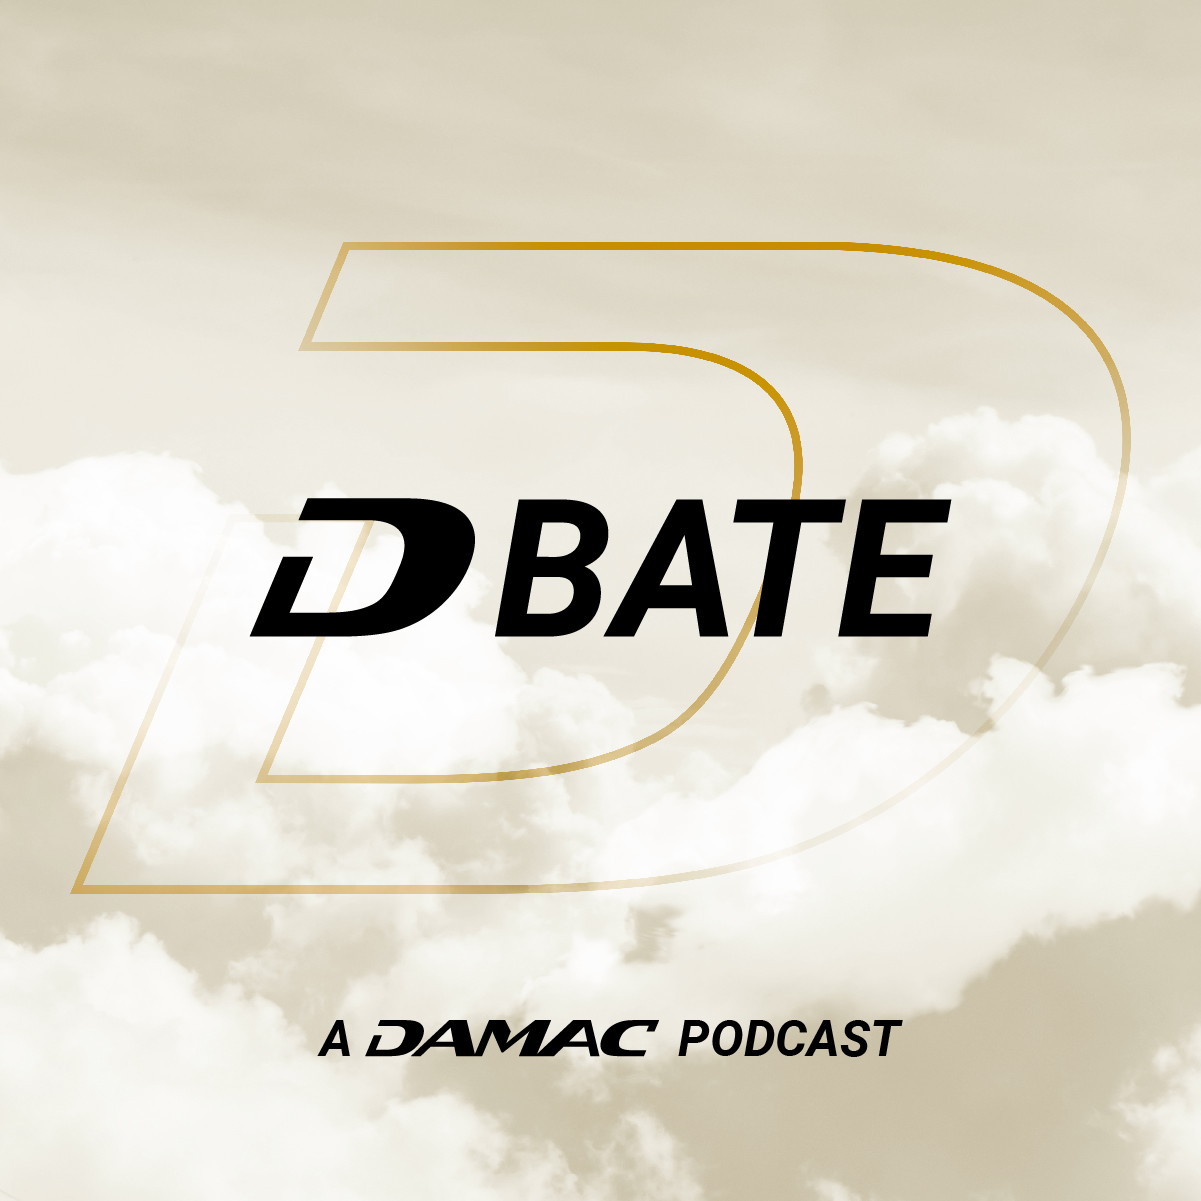 DBATE Podcast 1 : Getting Personal with Amira Sajwani - MD of Sales & Development at DAMAC Properties